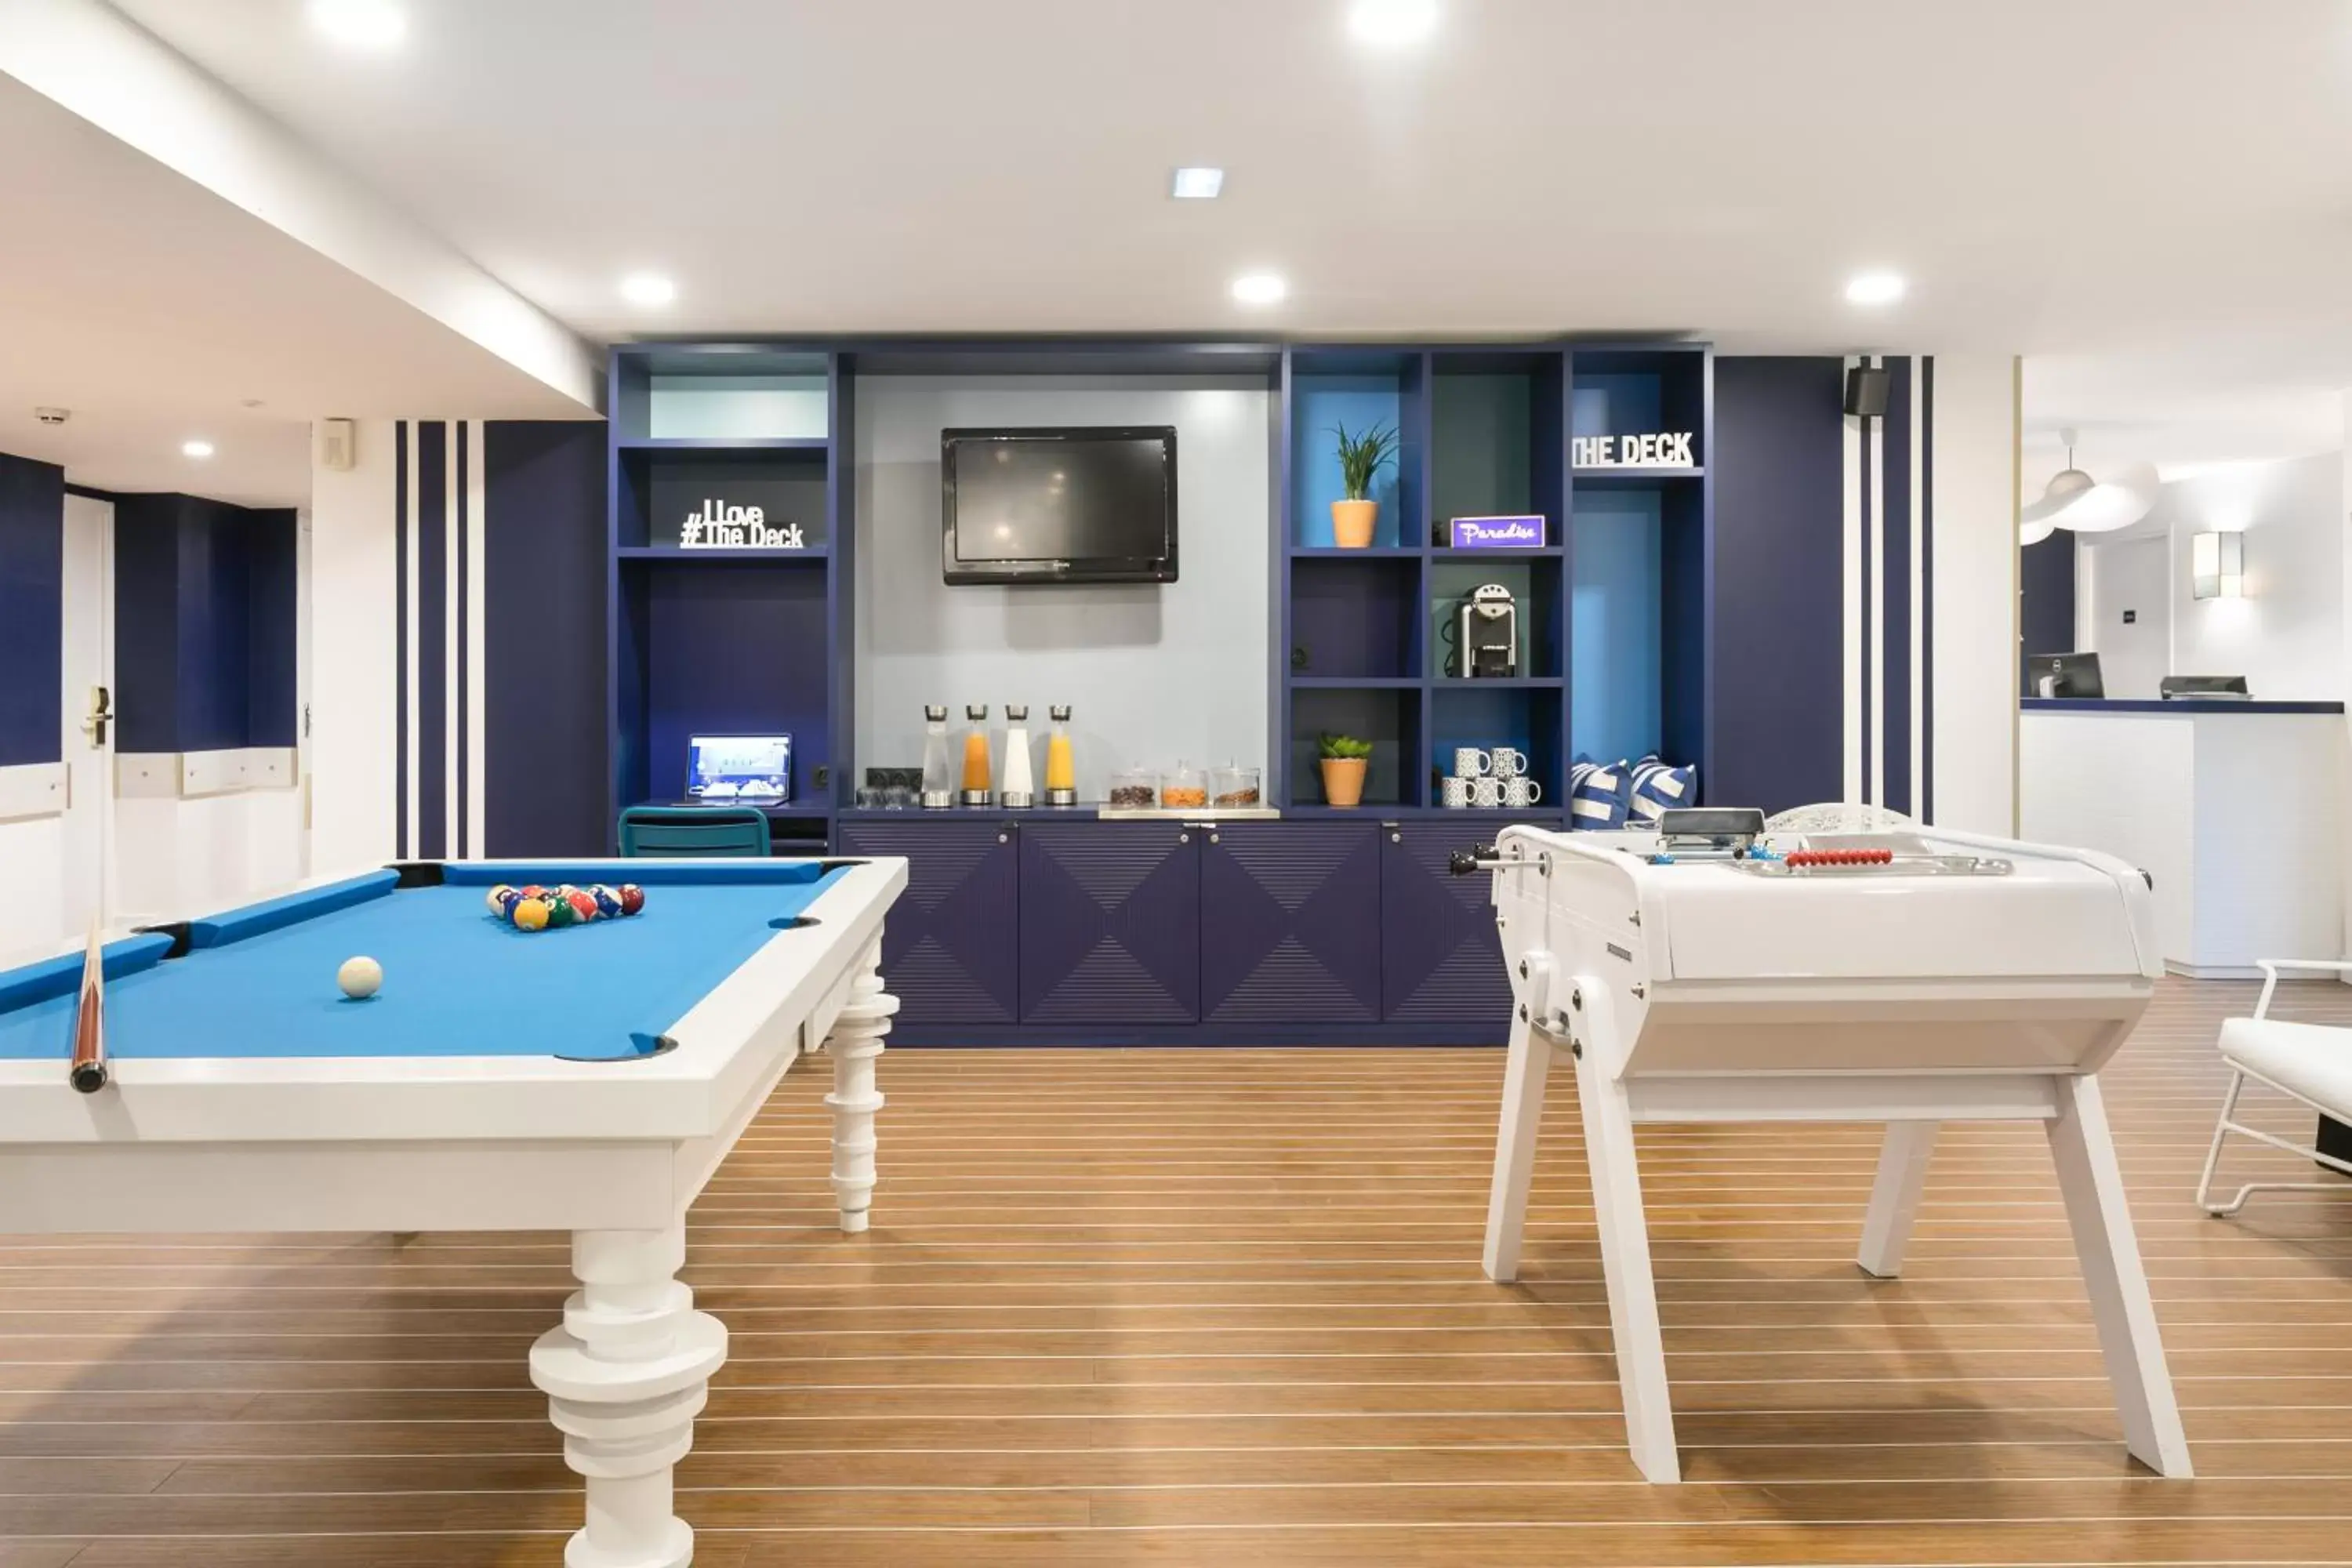 Billiard, Billiards in The Deck Hotel by Happyculture